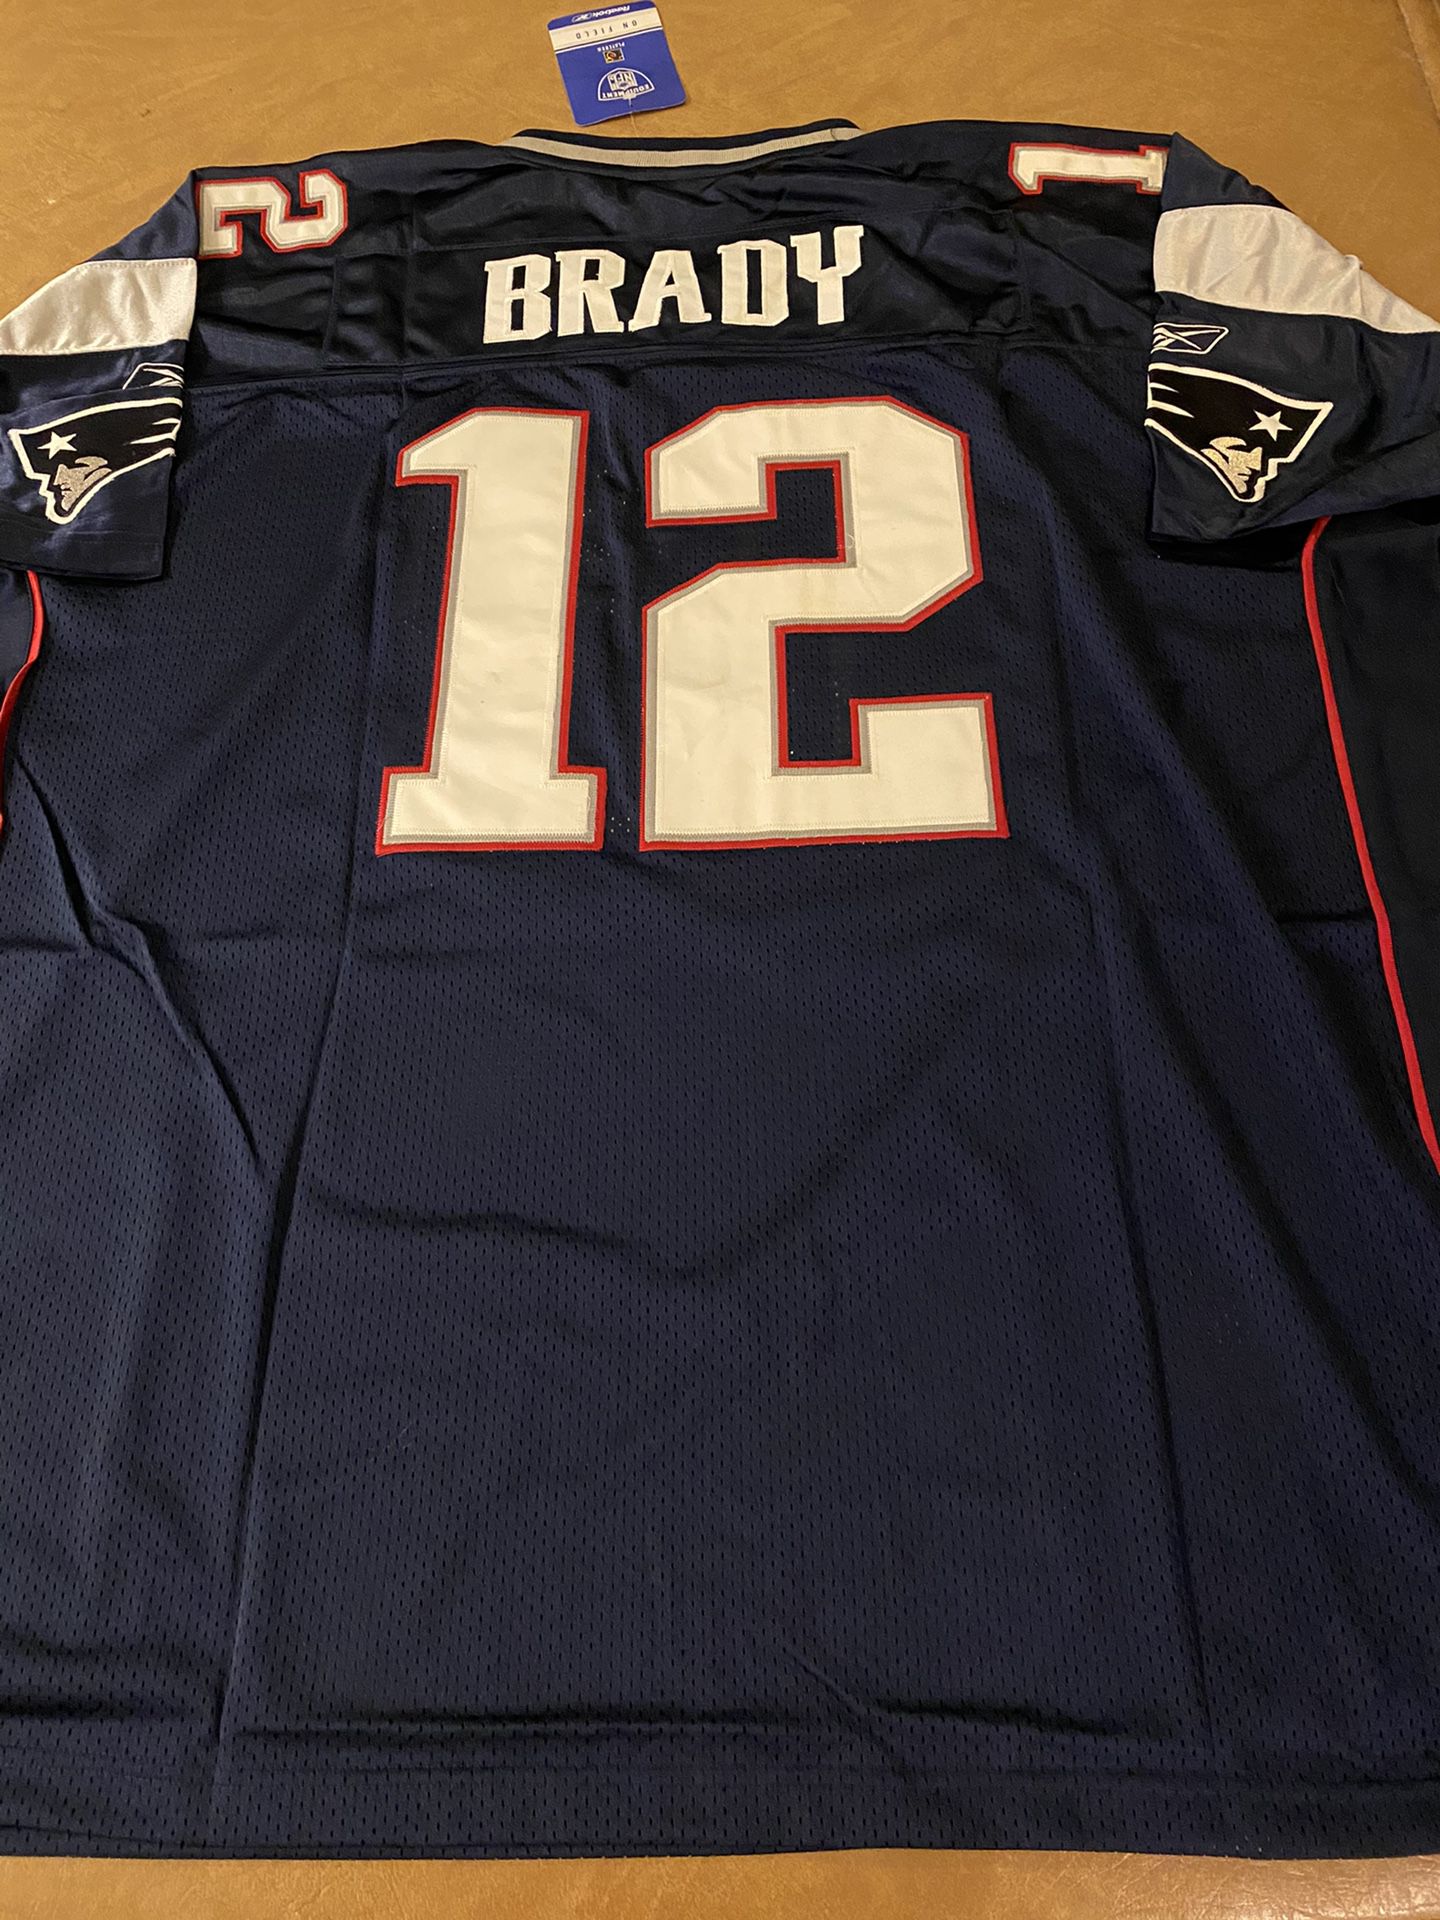 Patriots Brady jersey